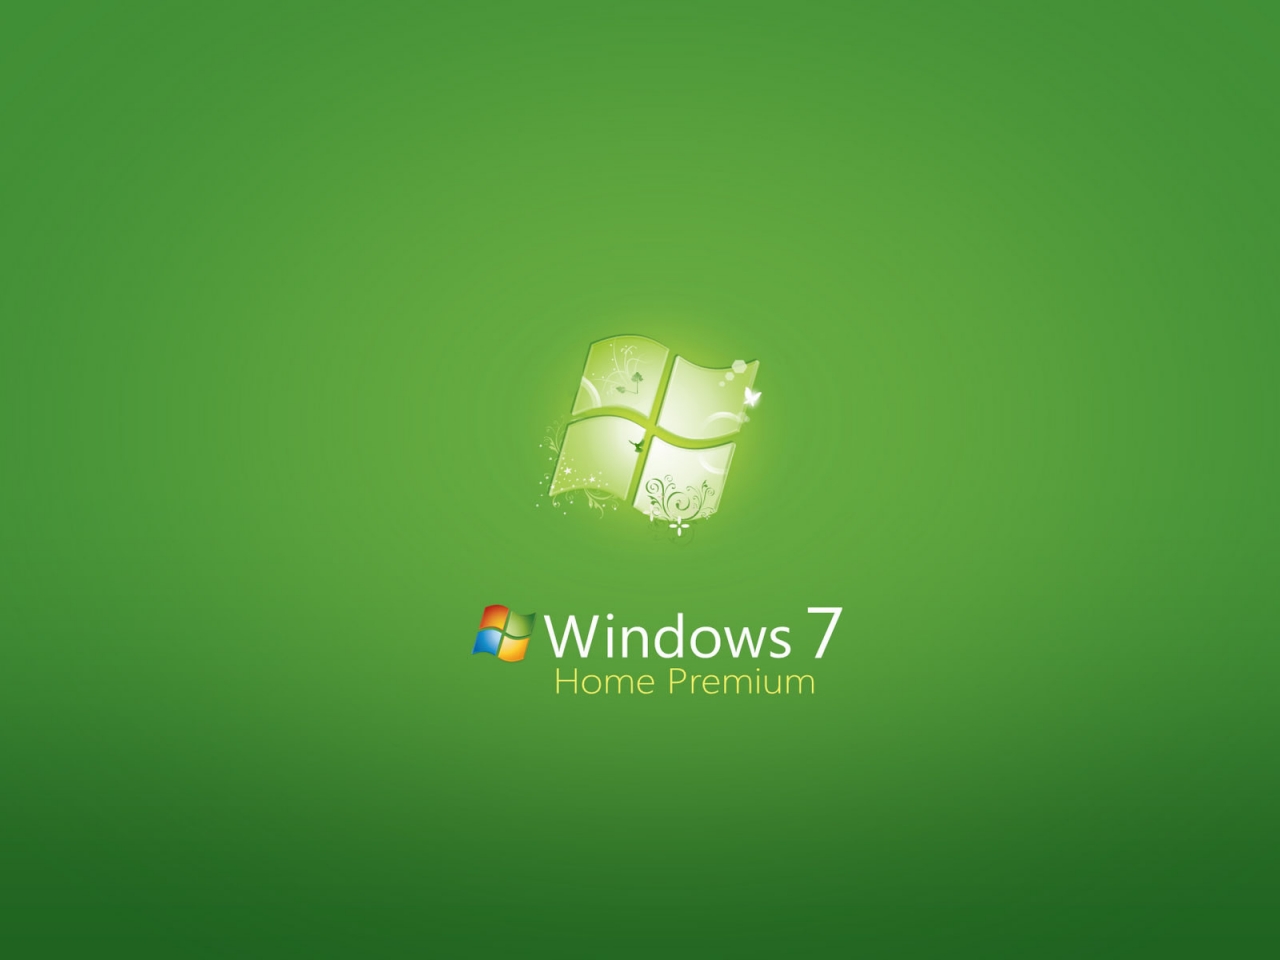 Windows 7 Home Premium Green for 1280 x 960 resolution